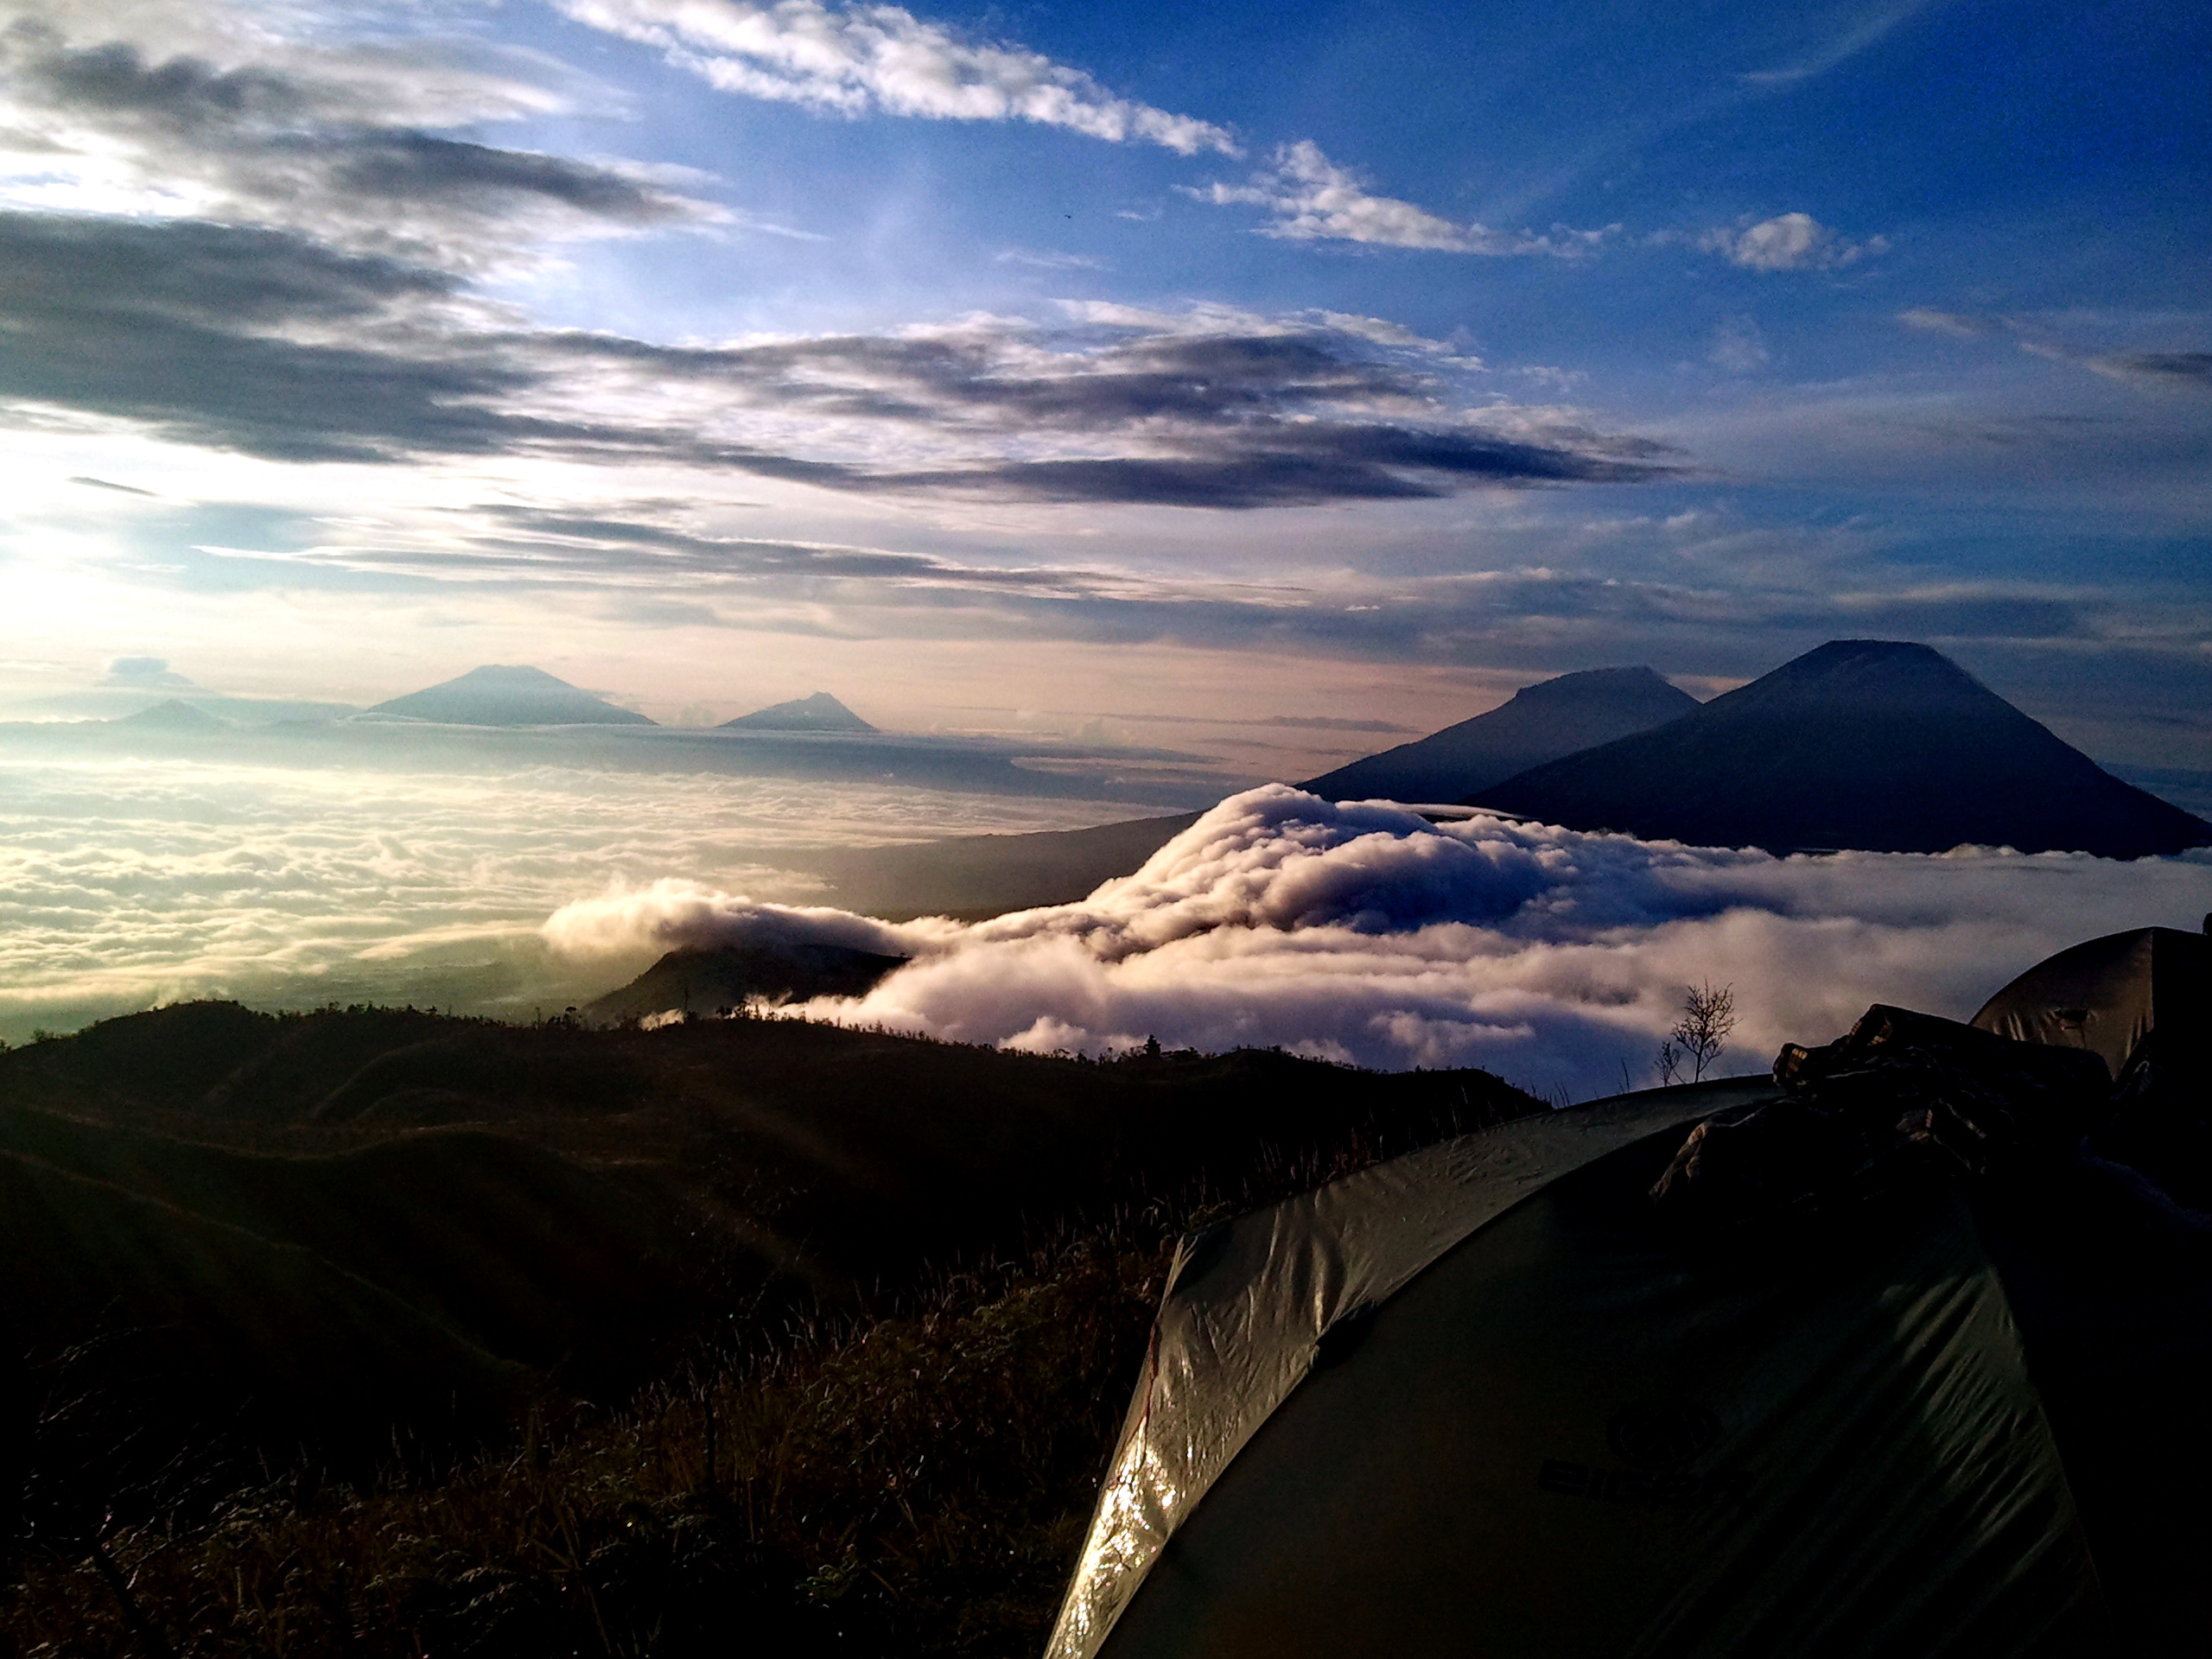 Tempat wisata Puncak Gunung Prau di Dieng Wonosobo Jawa Tengah